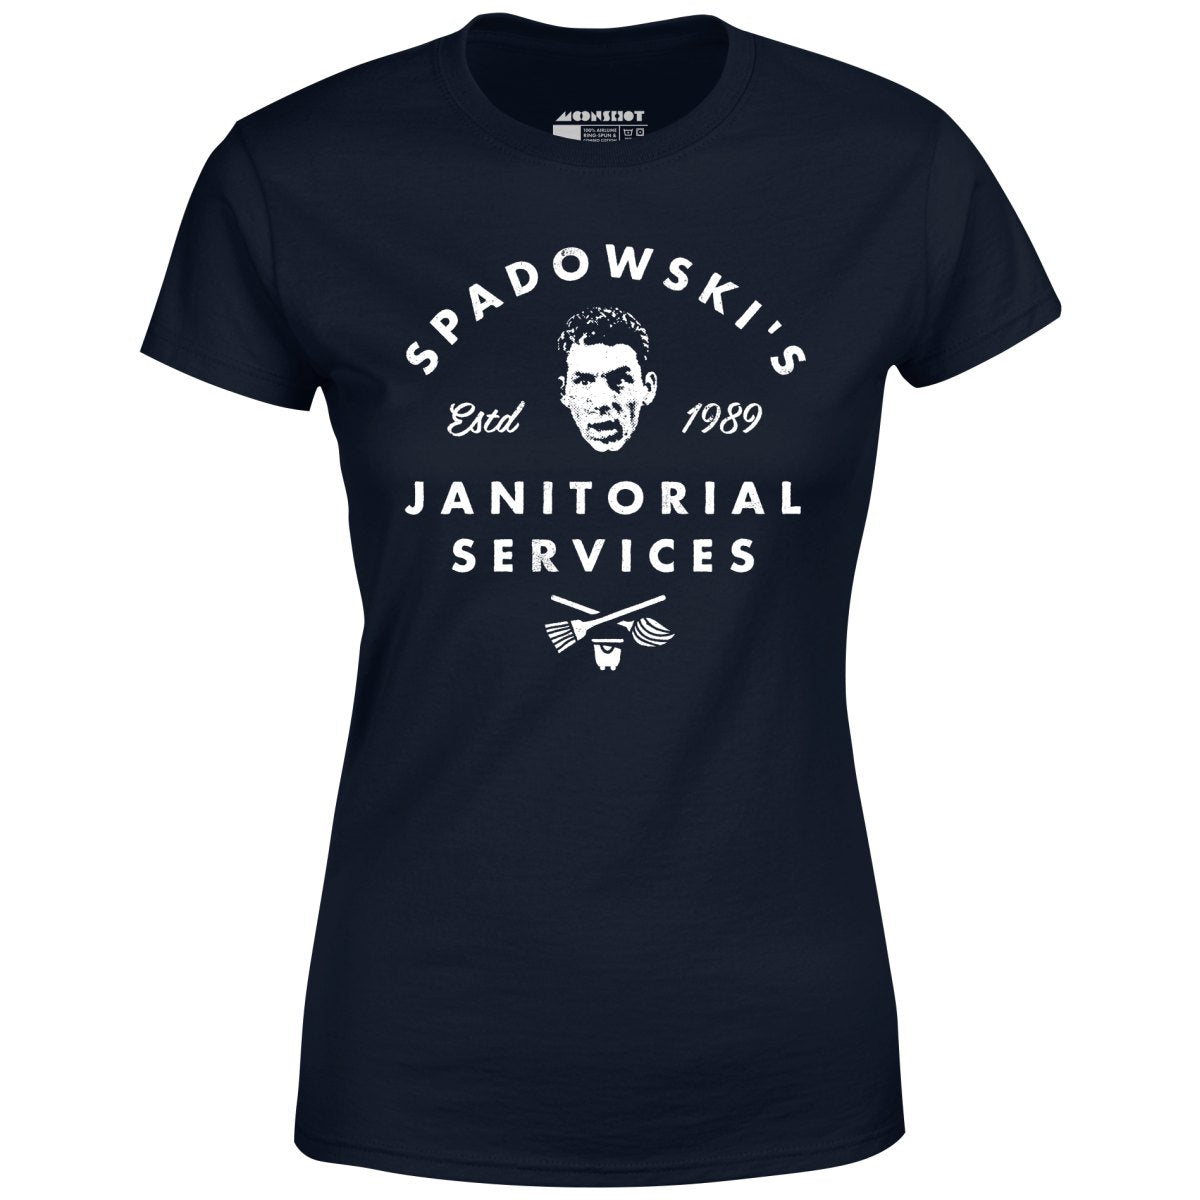 UHF Spadowski's Janitorial Services - Women's T-Shirt